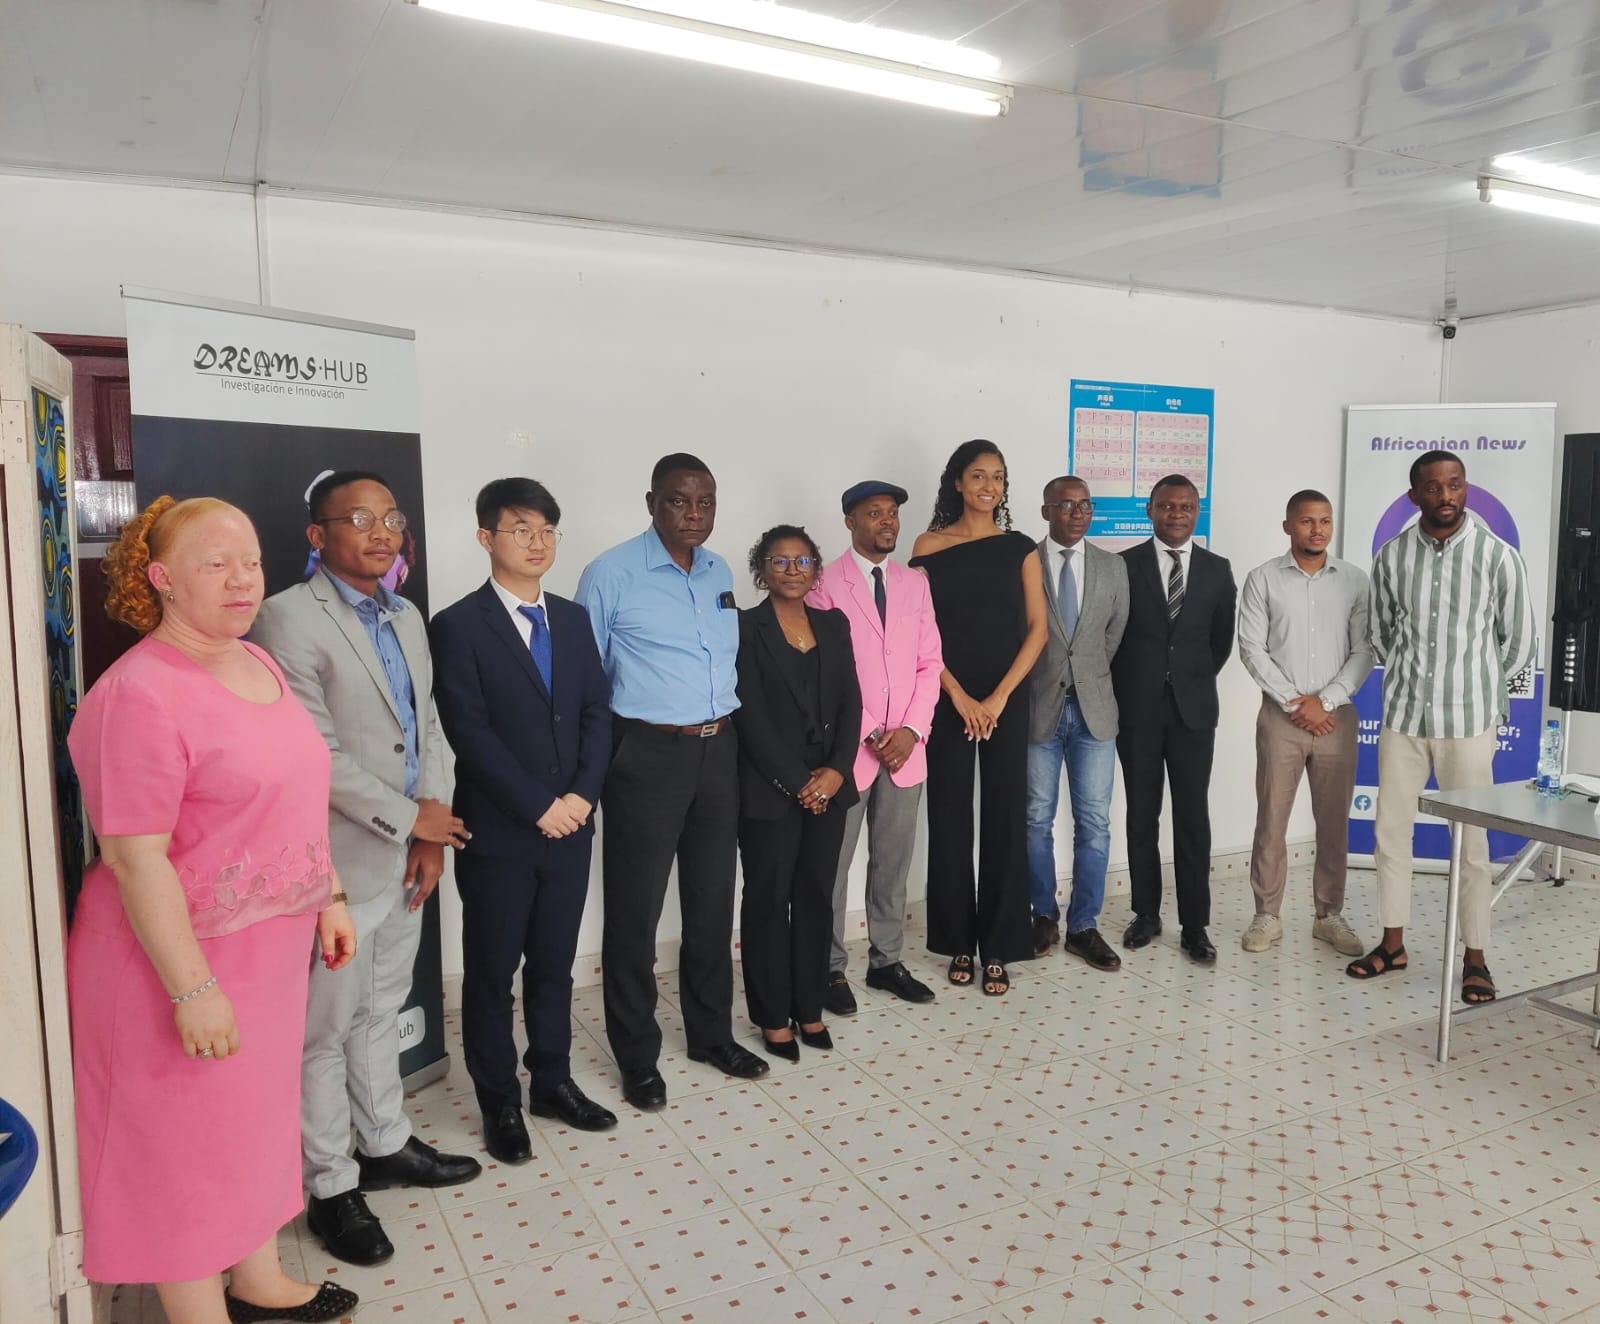 Equatorial Guinea: Dreams Hub Hosts Finals of Pitch your Dreams